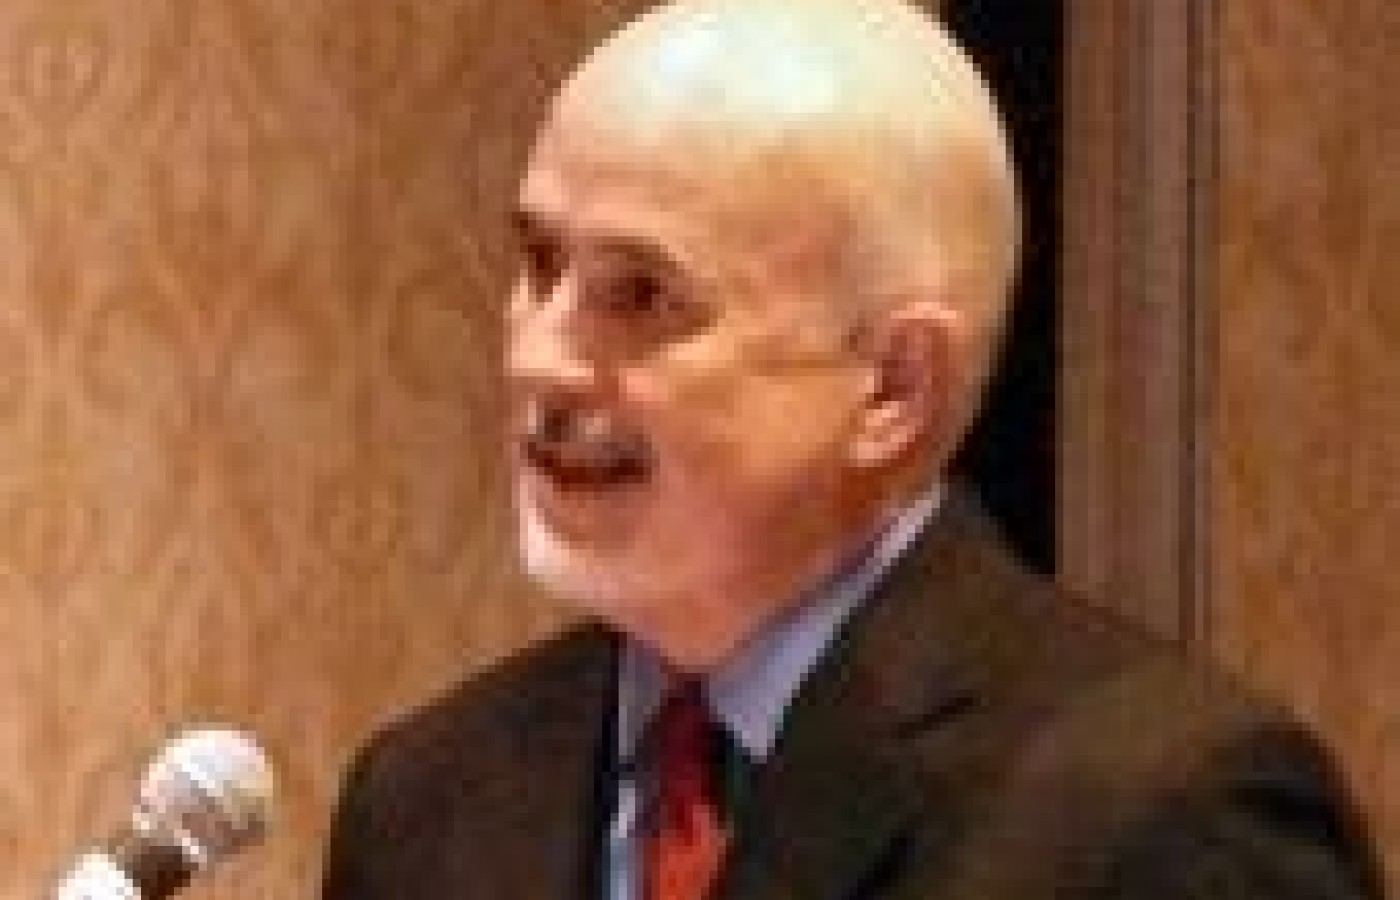 Dr. J. Michael Flynn